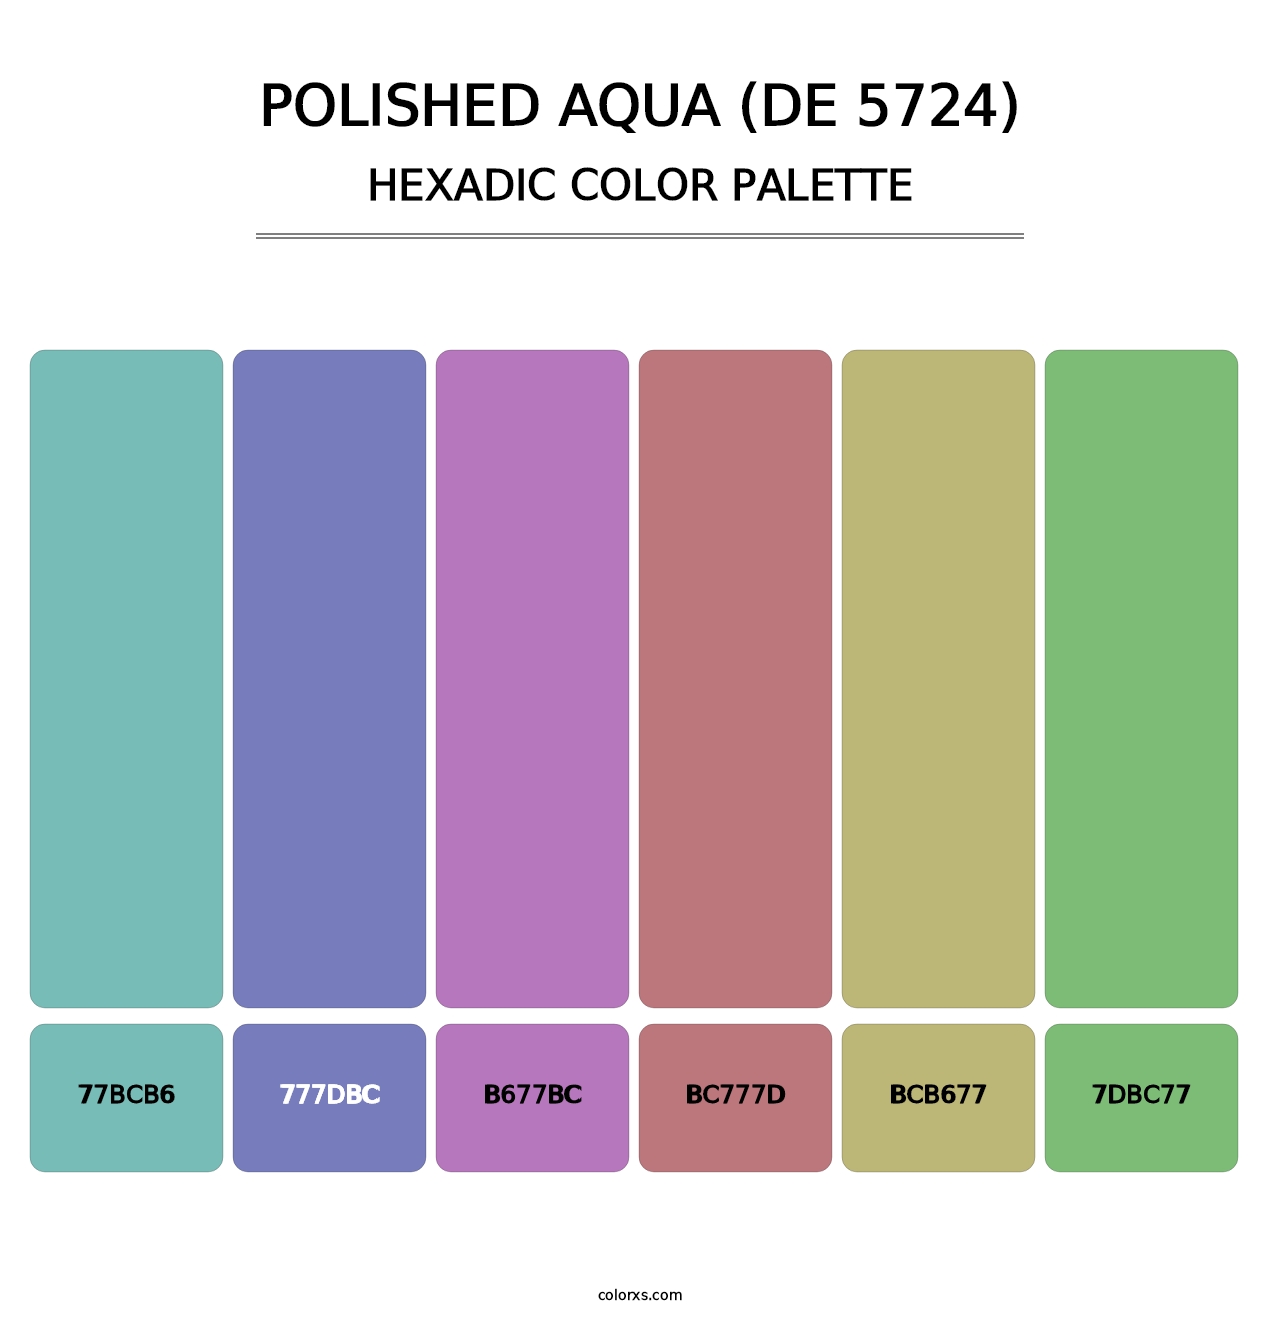 Polished Aqua (DE 5724) - Hexadic Color Palette